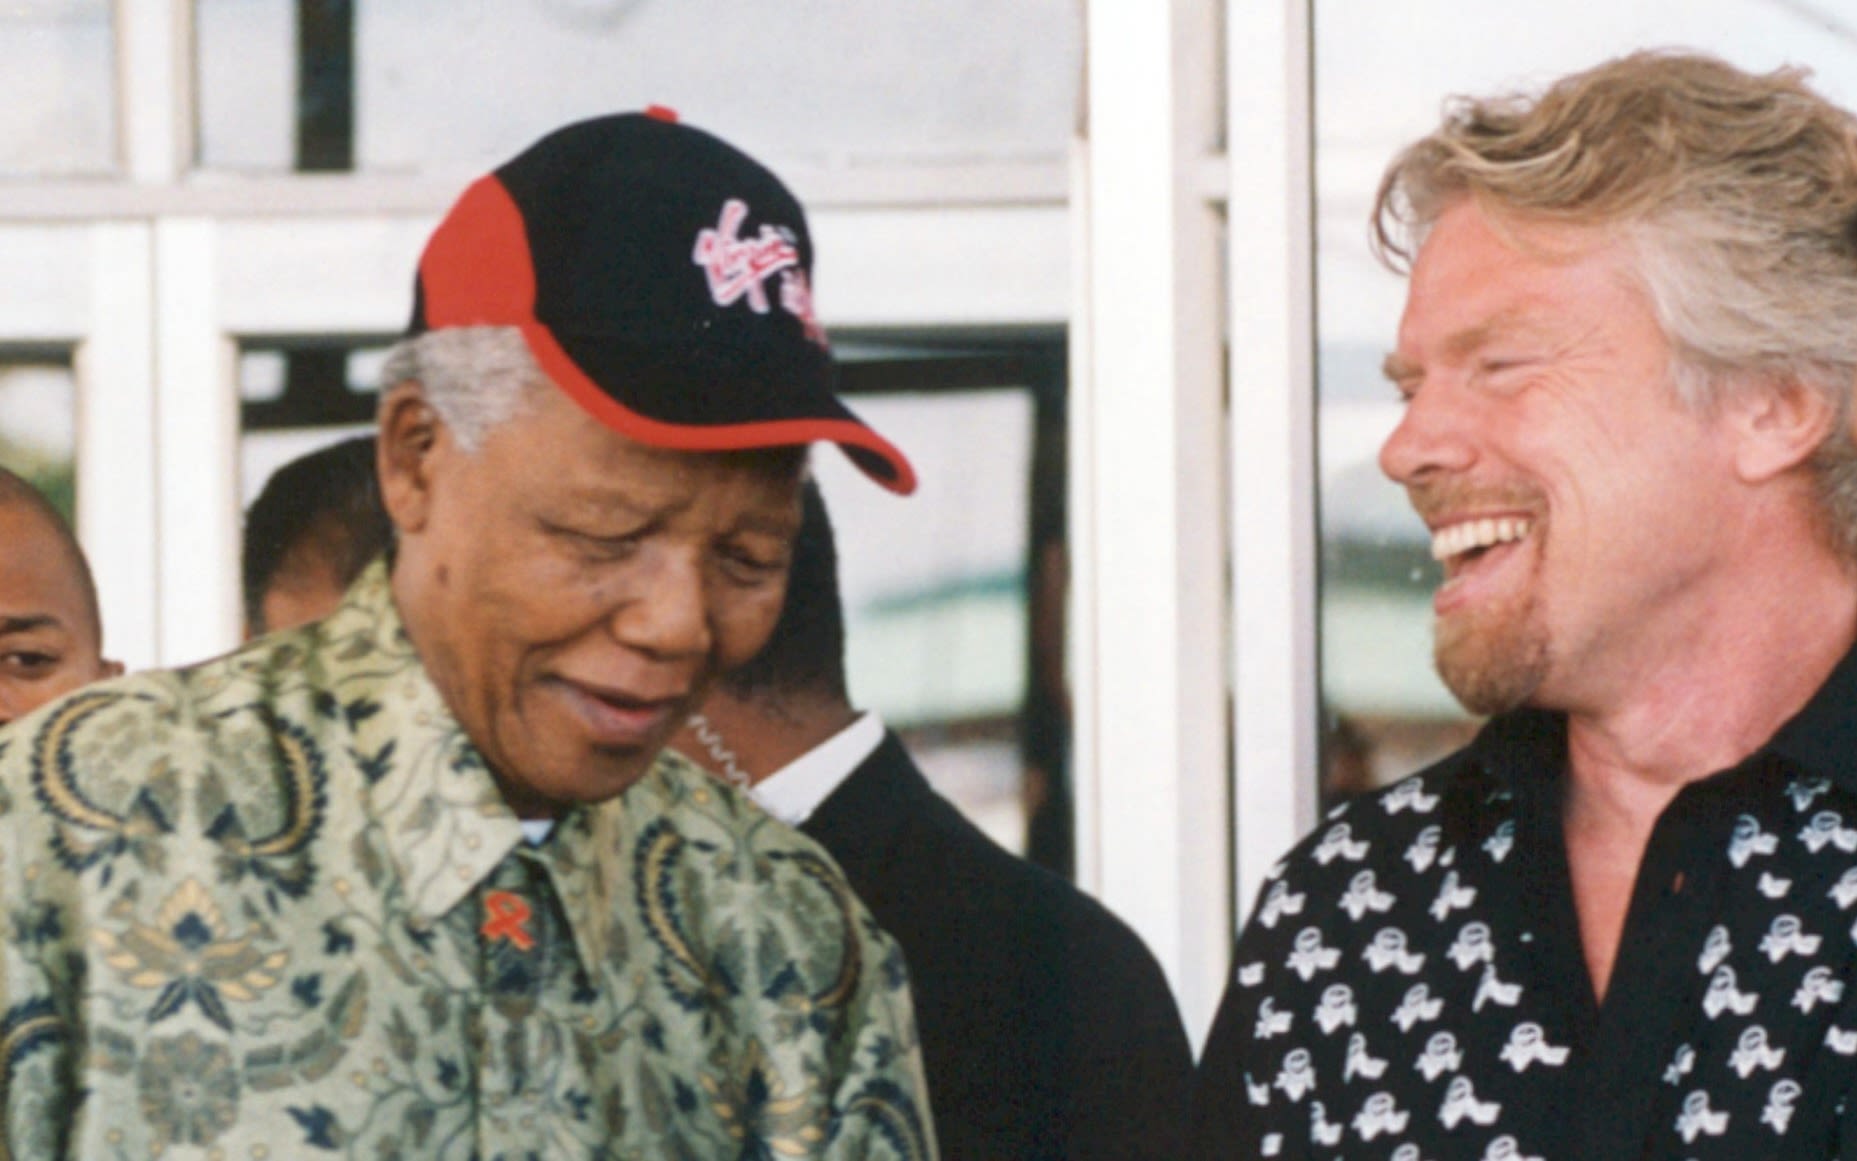 Richard Branson laughing with Nelson Mandela